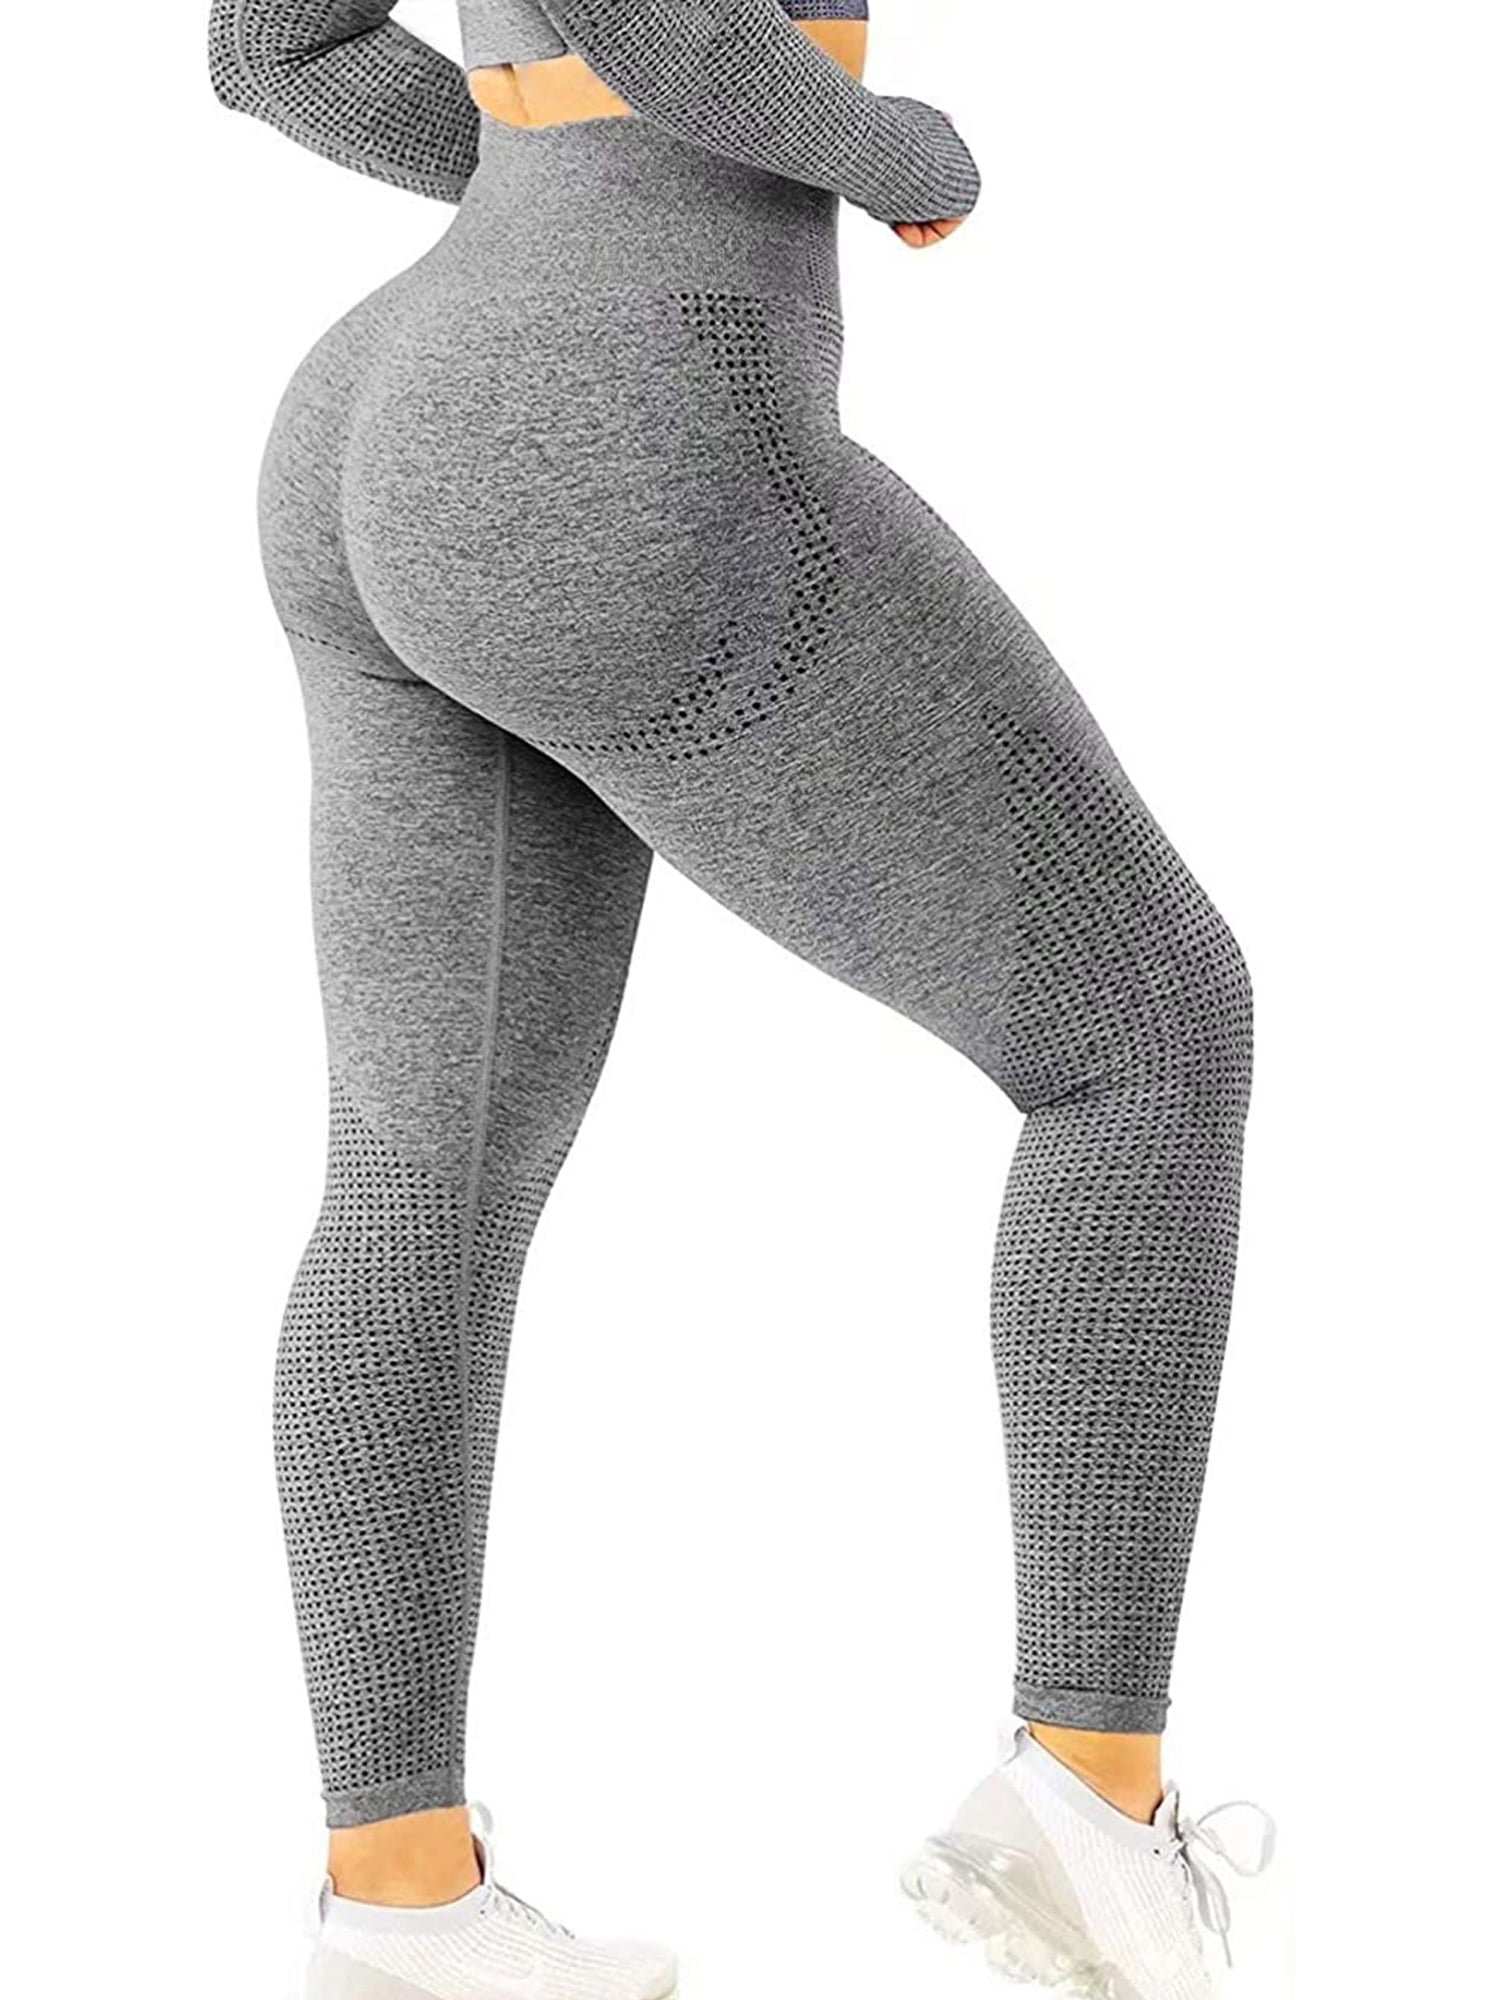 Women Yoga Fitness Leggings Seamless Gym Running Training Sportswear Pants 